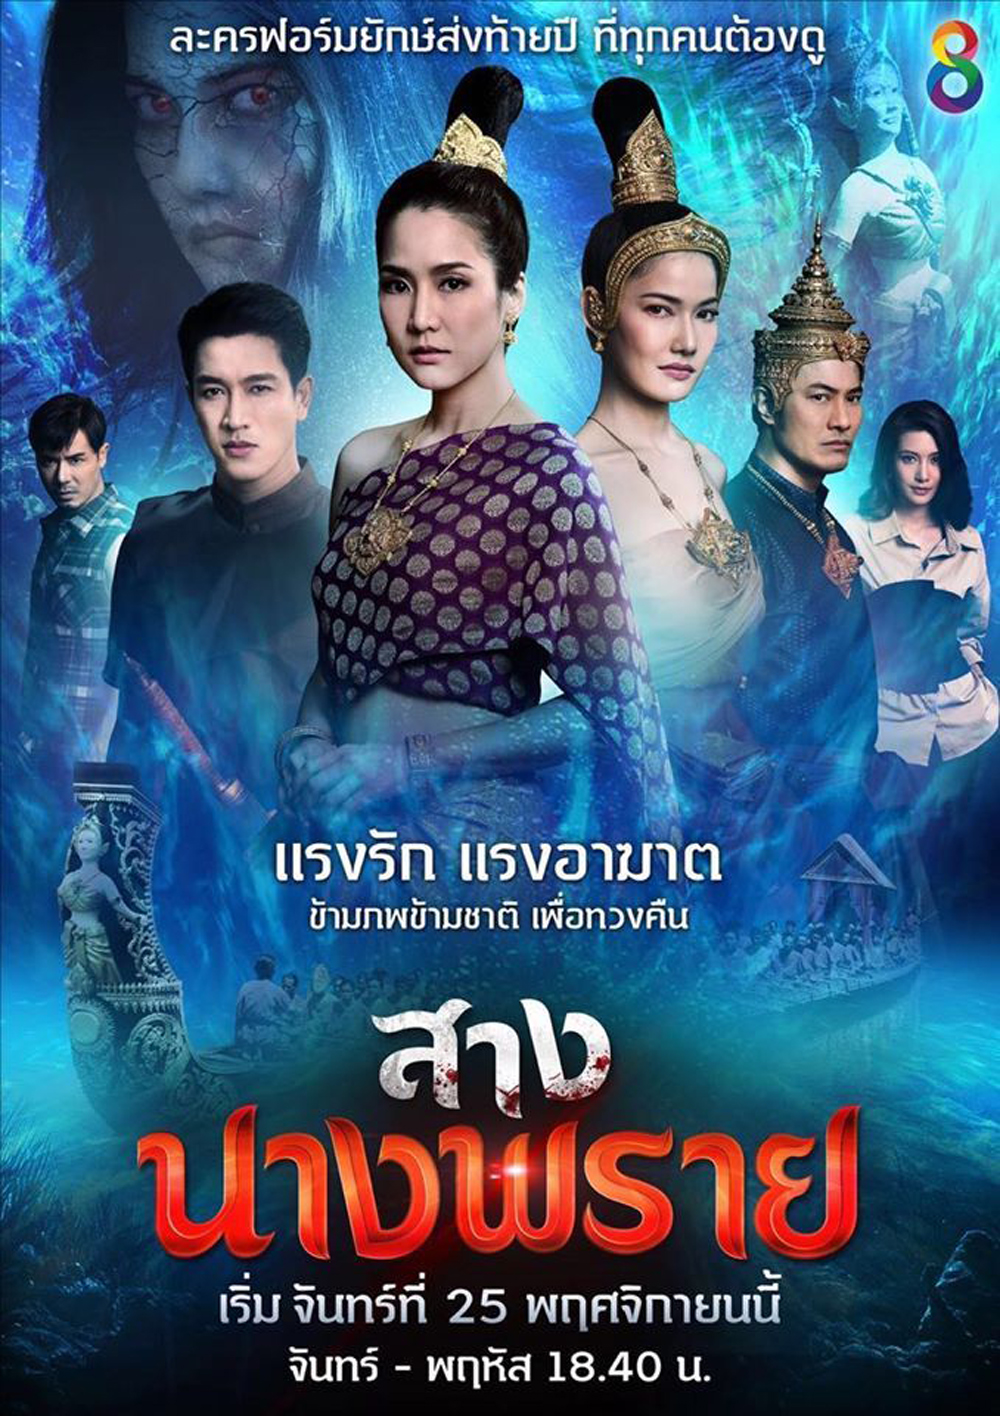 Poster Phim Oan Hồn Ma Nữ (Saang Nang Praai)